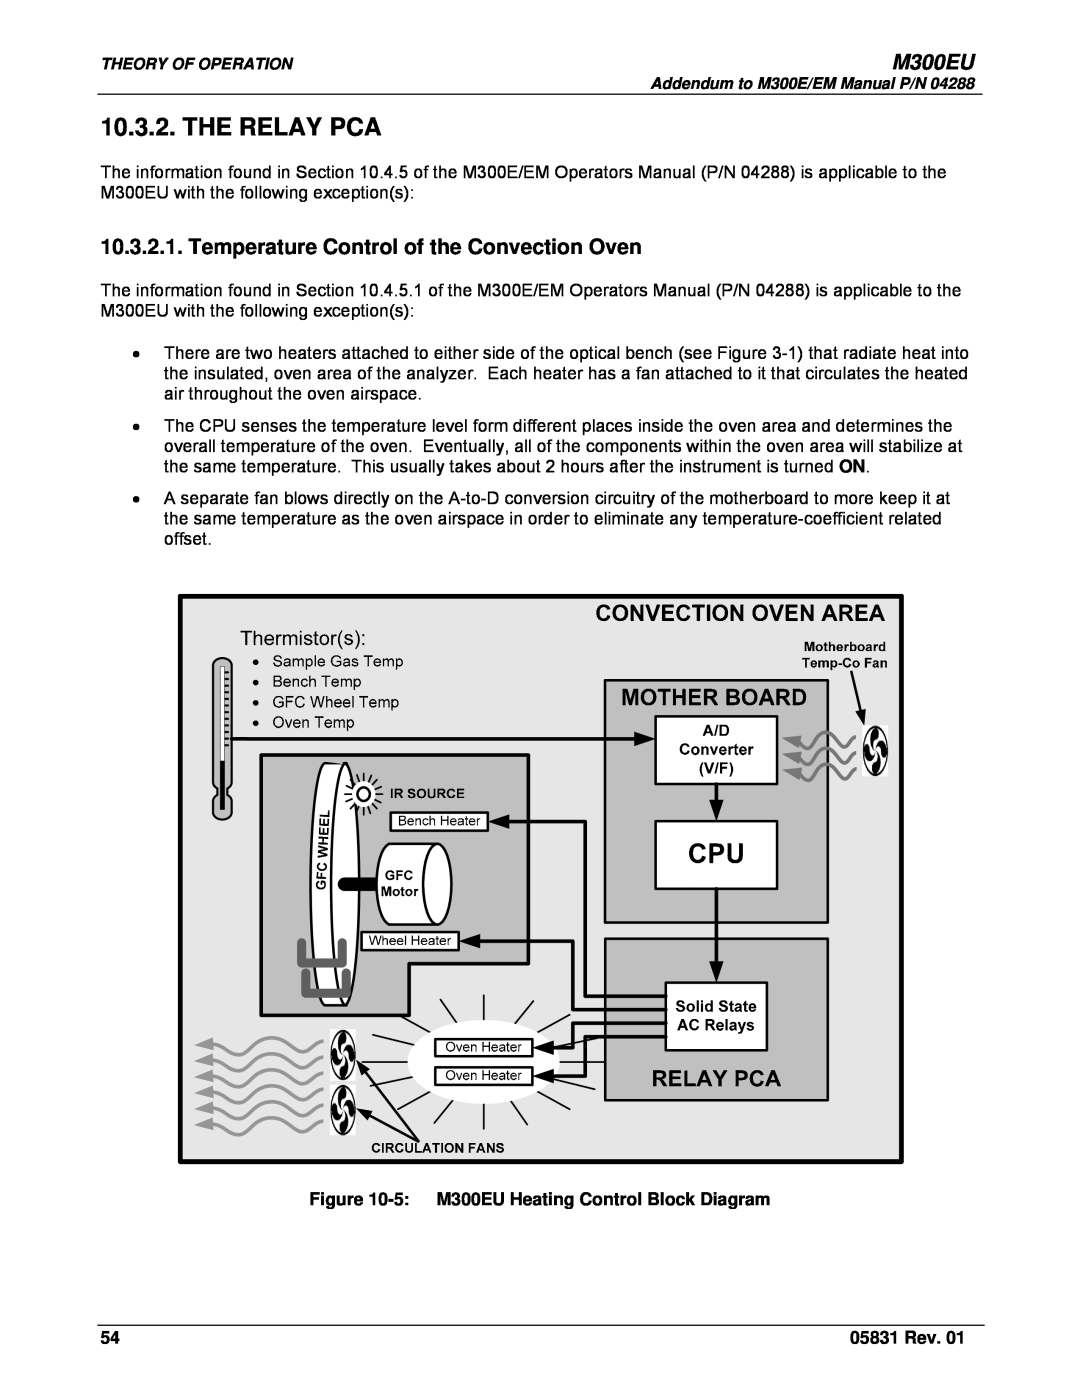 Teledyne Model 300EU manual The Relay Pca, Temperature Control of the Convection Oven, M300EU, 05831 Rev 